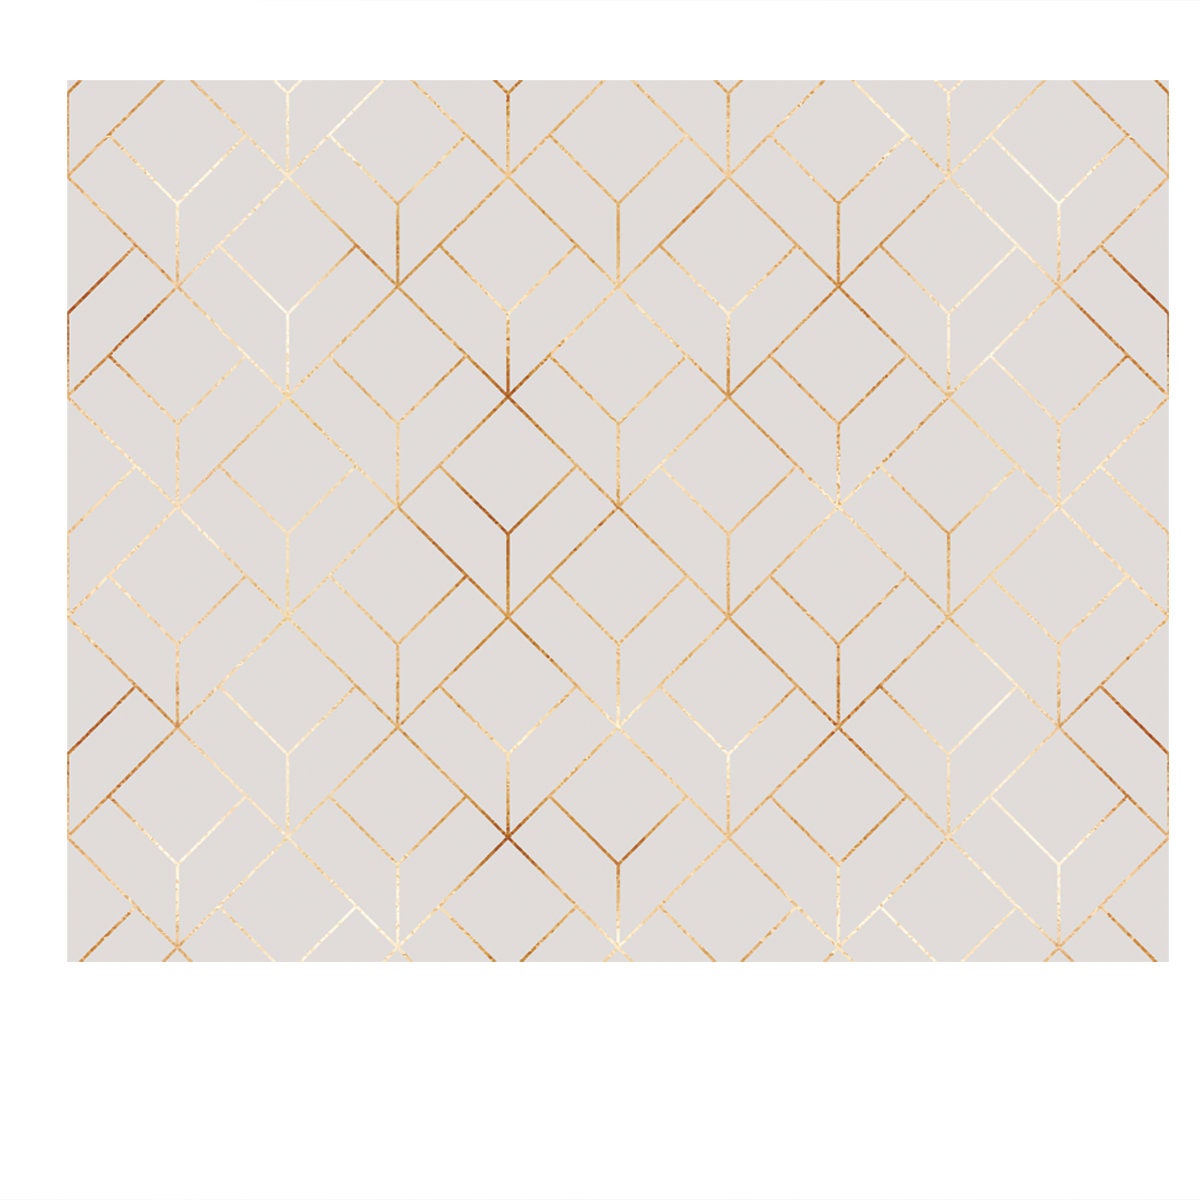 Elegant Gold Geometric Seamless Pattern with Hexagon Tiles Wallpaper Bedroom Mural